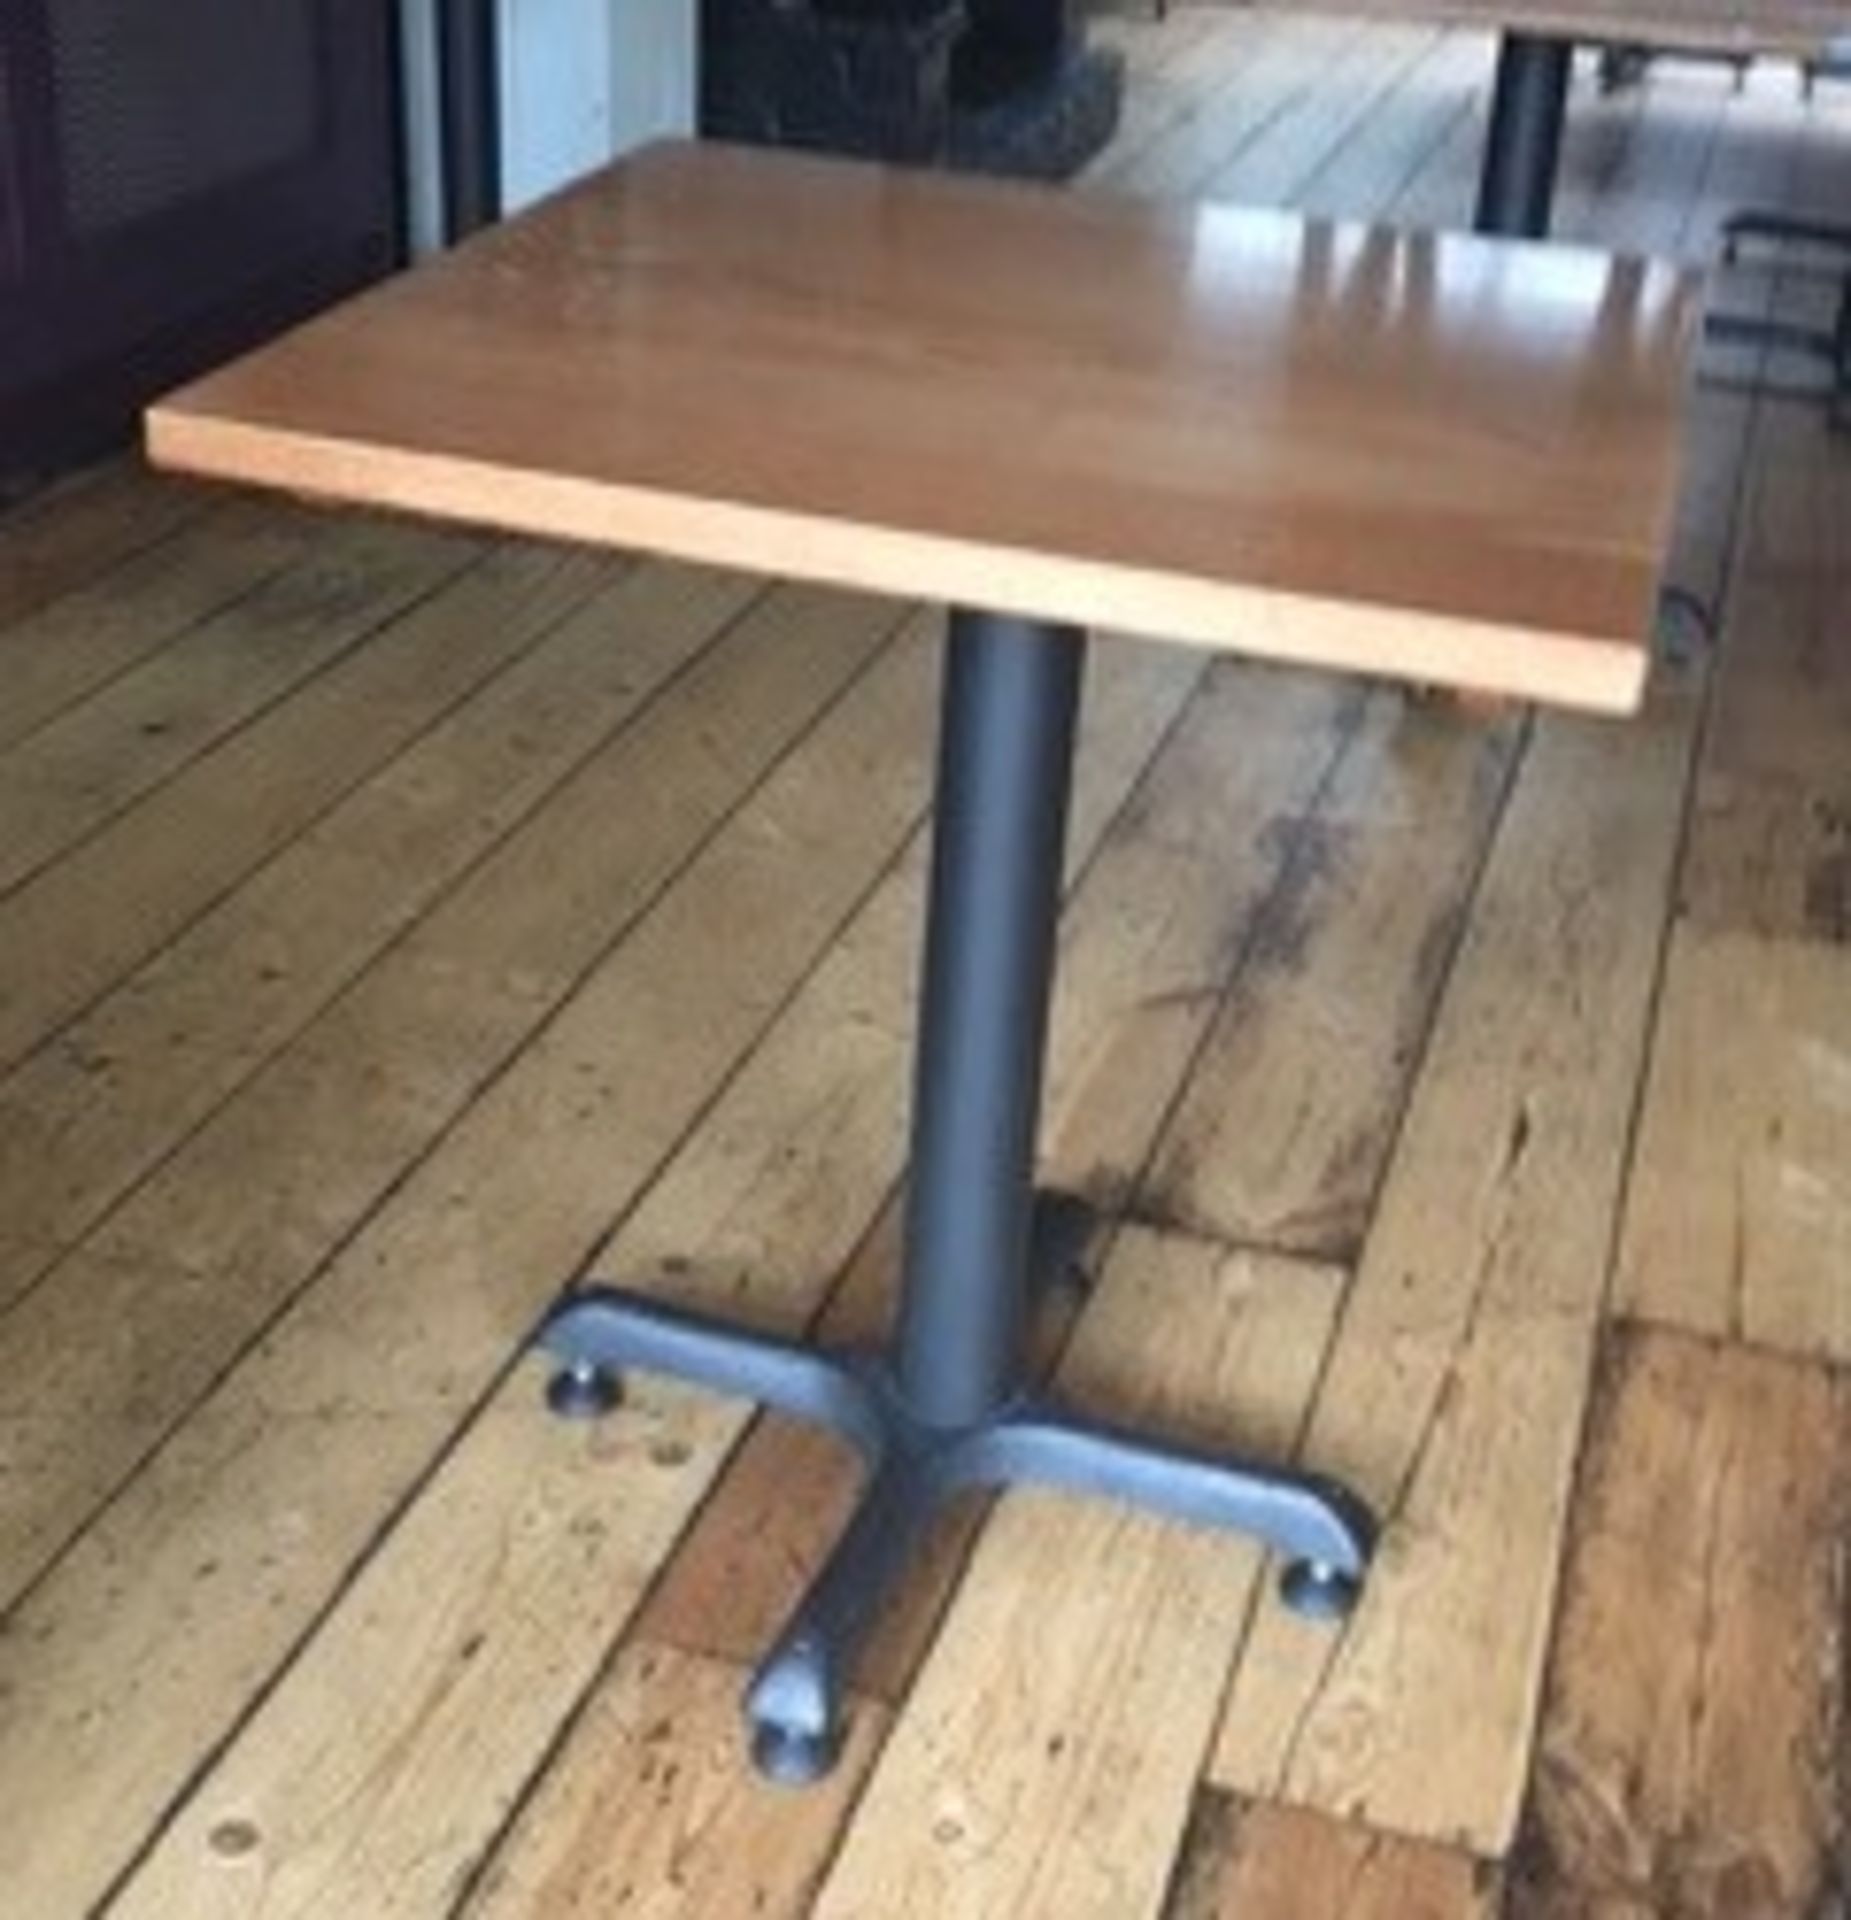 5 x Square Bistro Tables - Dimensions: 65.5cm x 65.5cm - Gourmet Restaurant Closure - Buyer To - Image 3 of 3